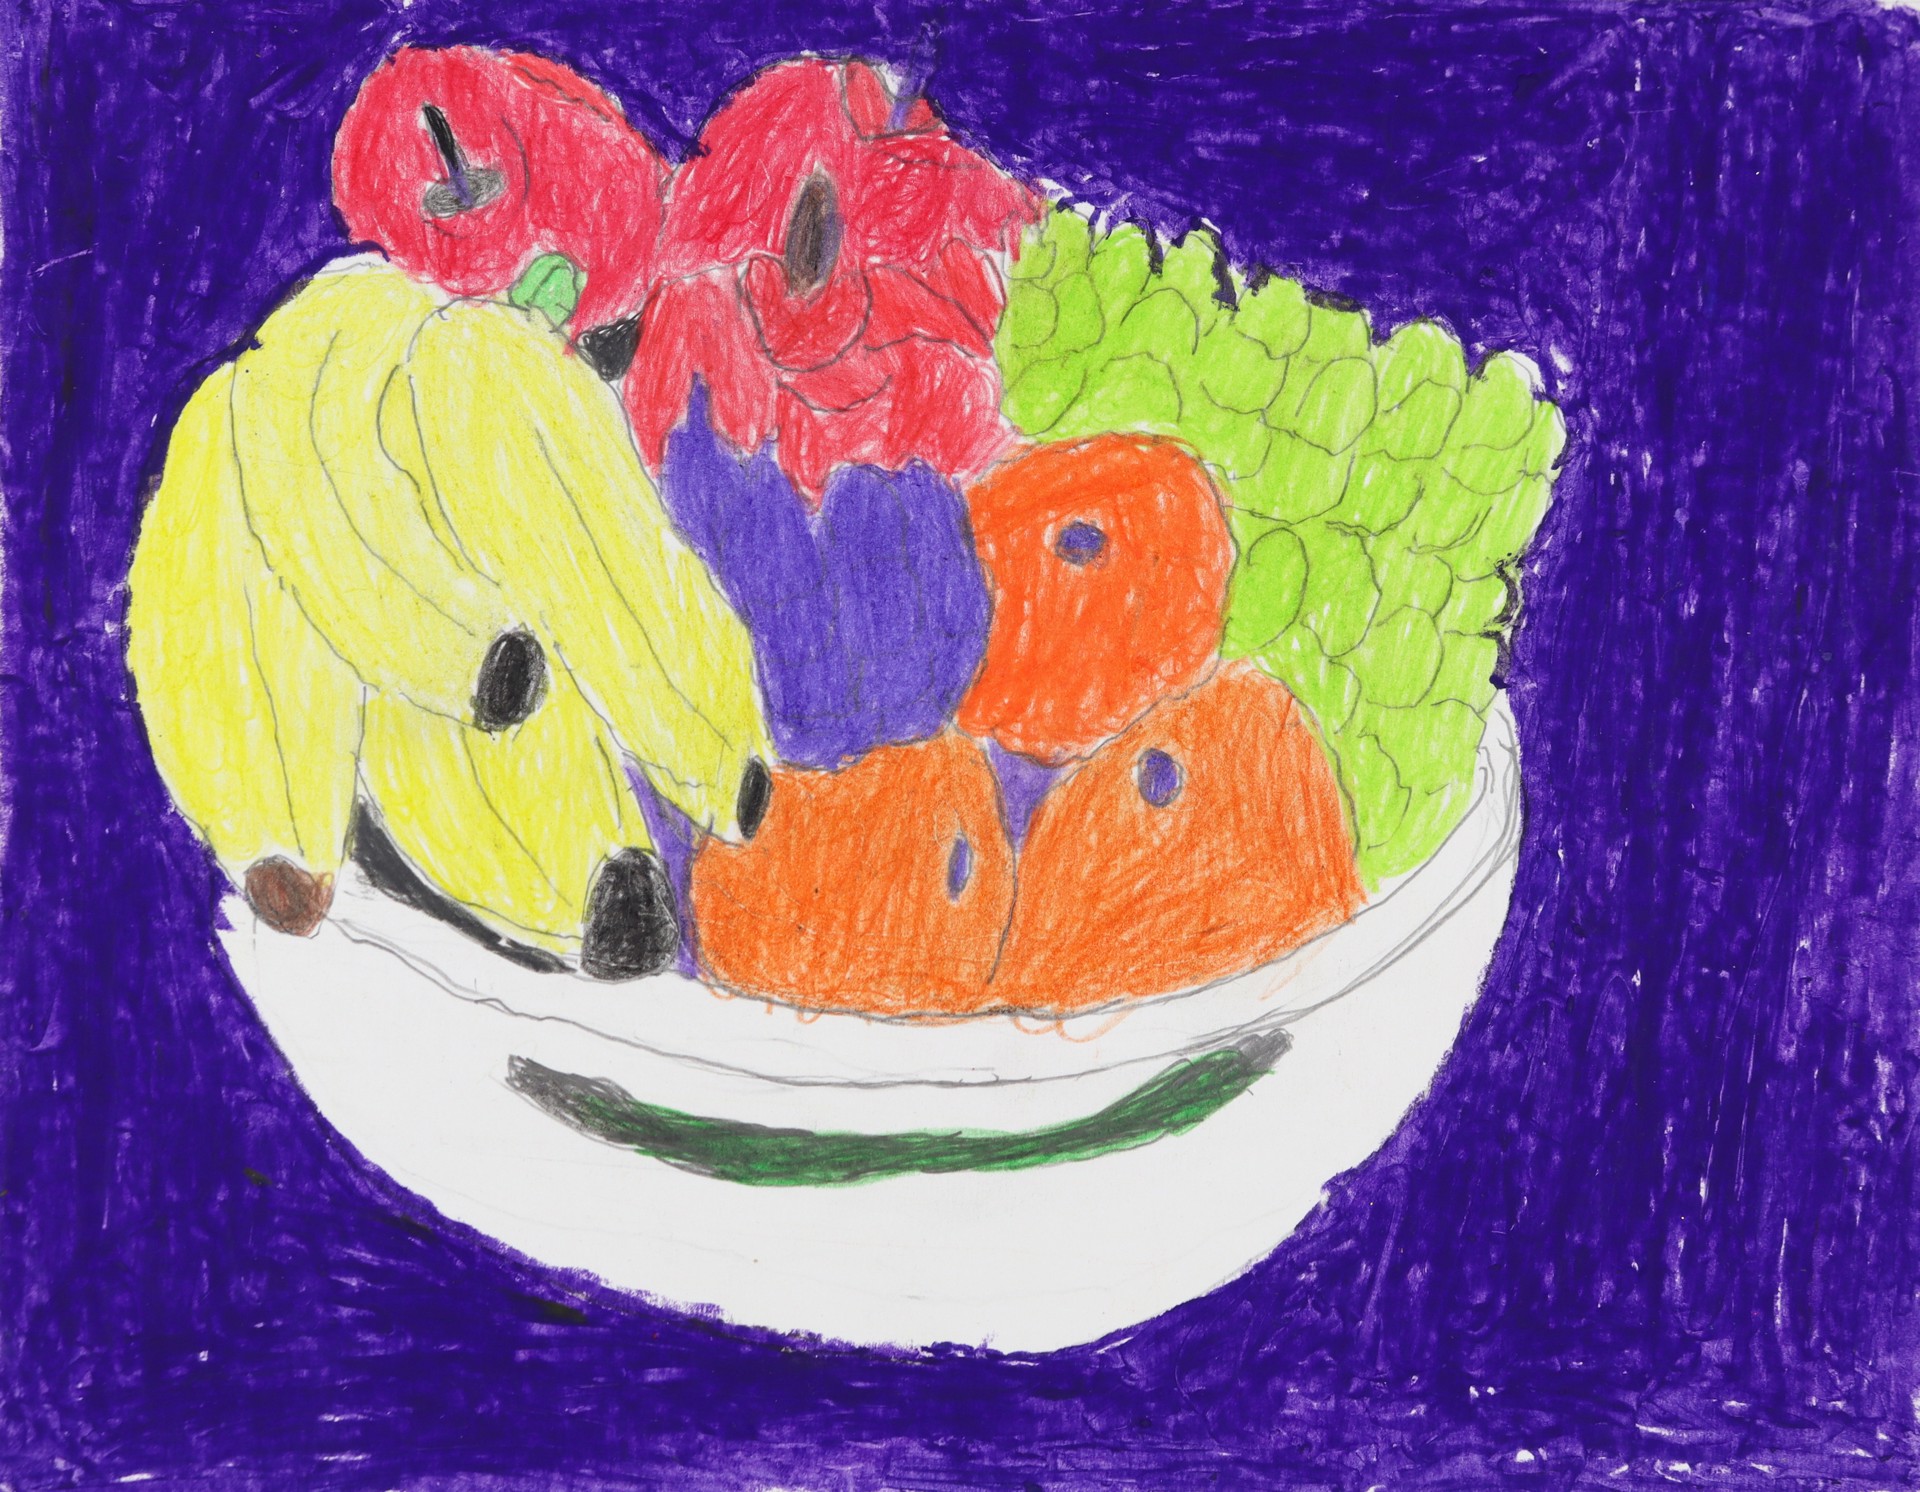 Bowl of Fruit by Paul Lewis